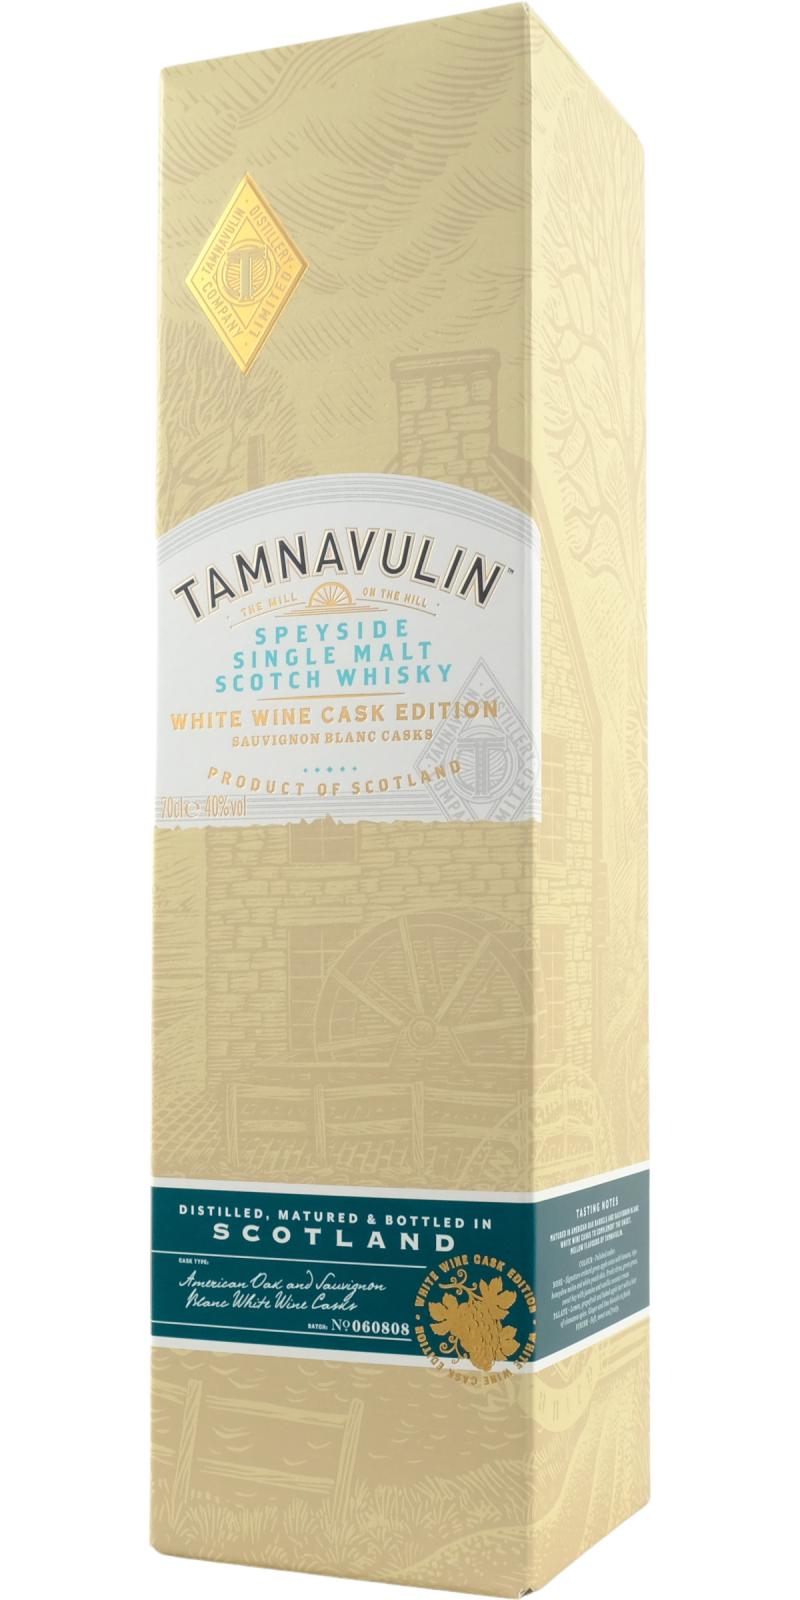 Tamnavulin White Wine Cask Edition